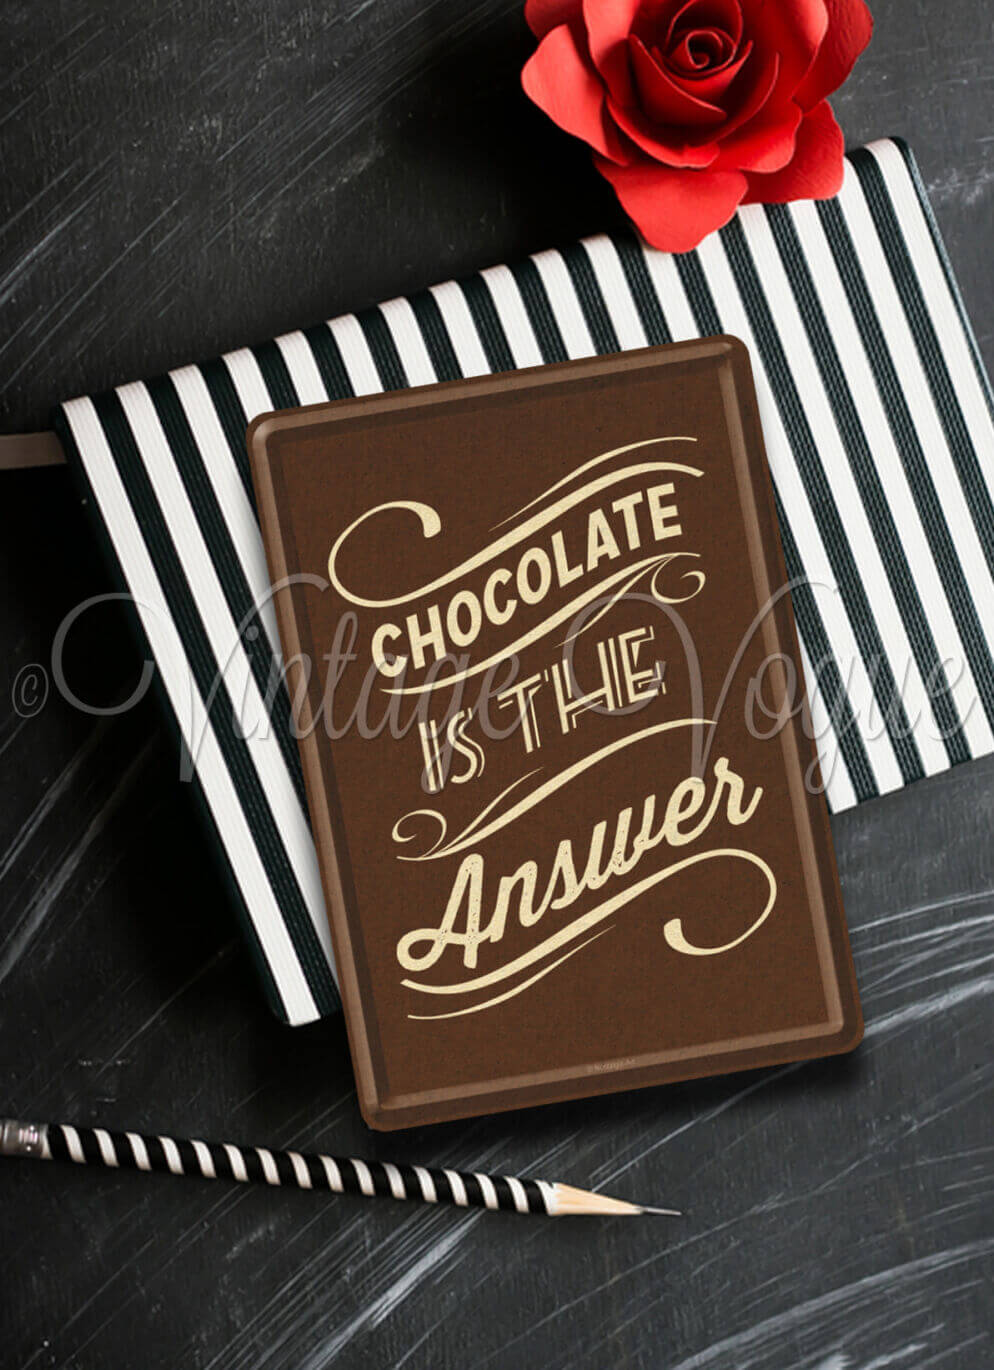 Nostalgic Art Retro Blechpostkarte "Chocolate is the answer"